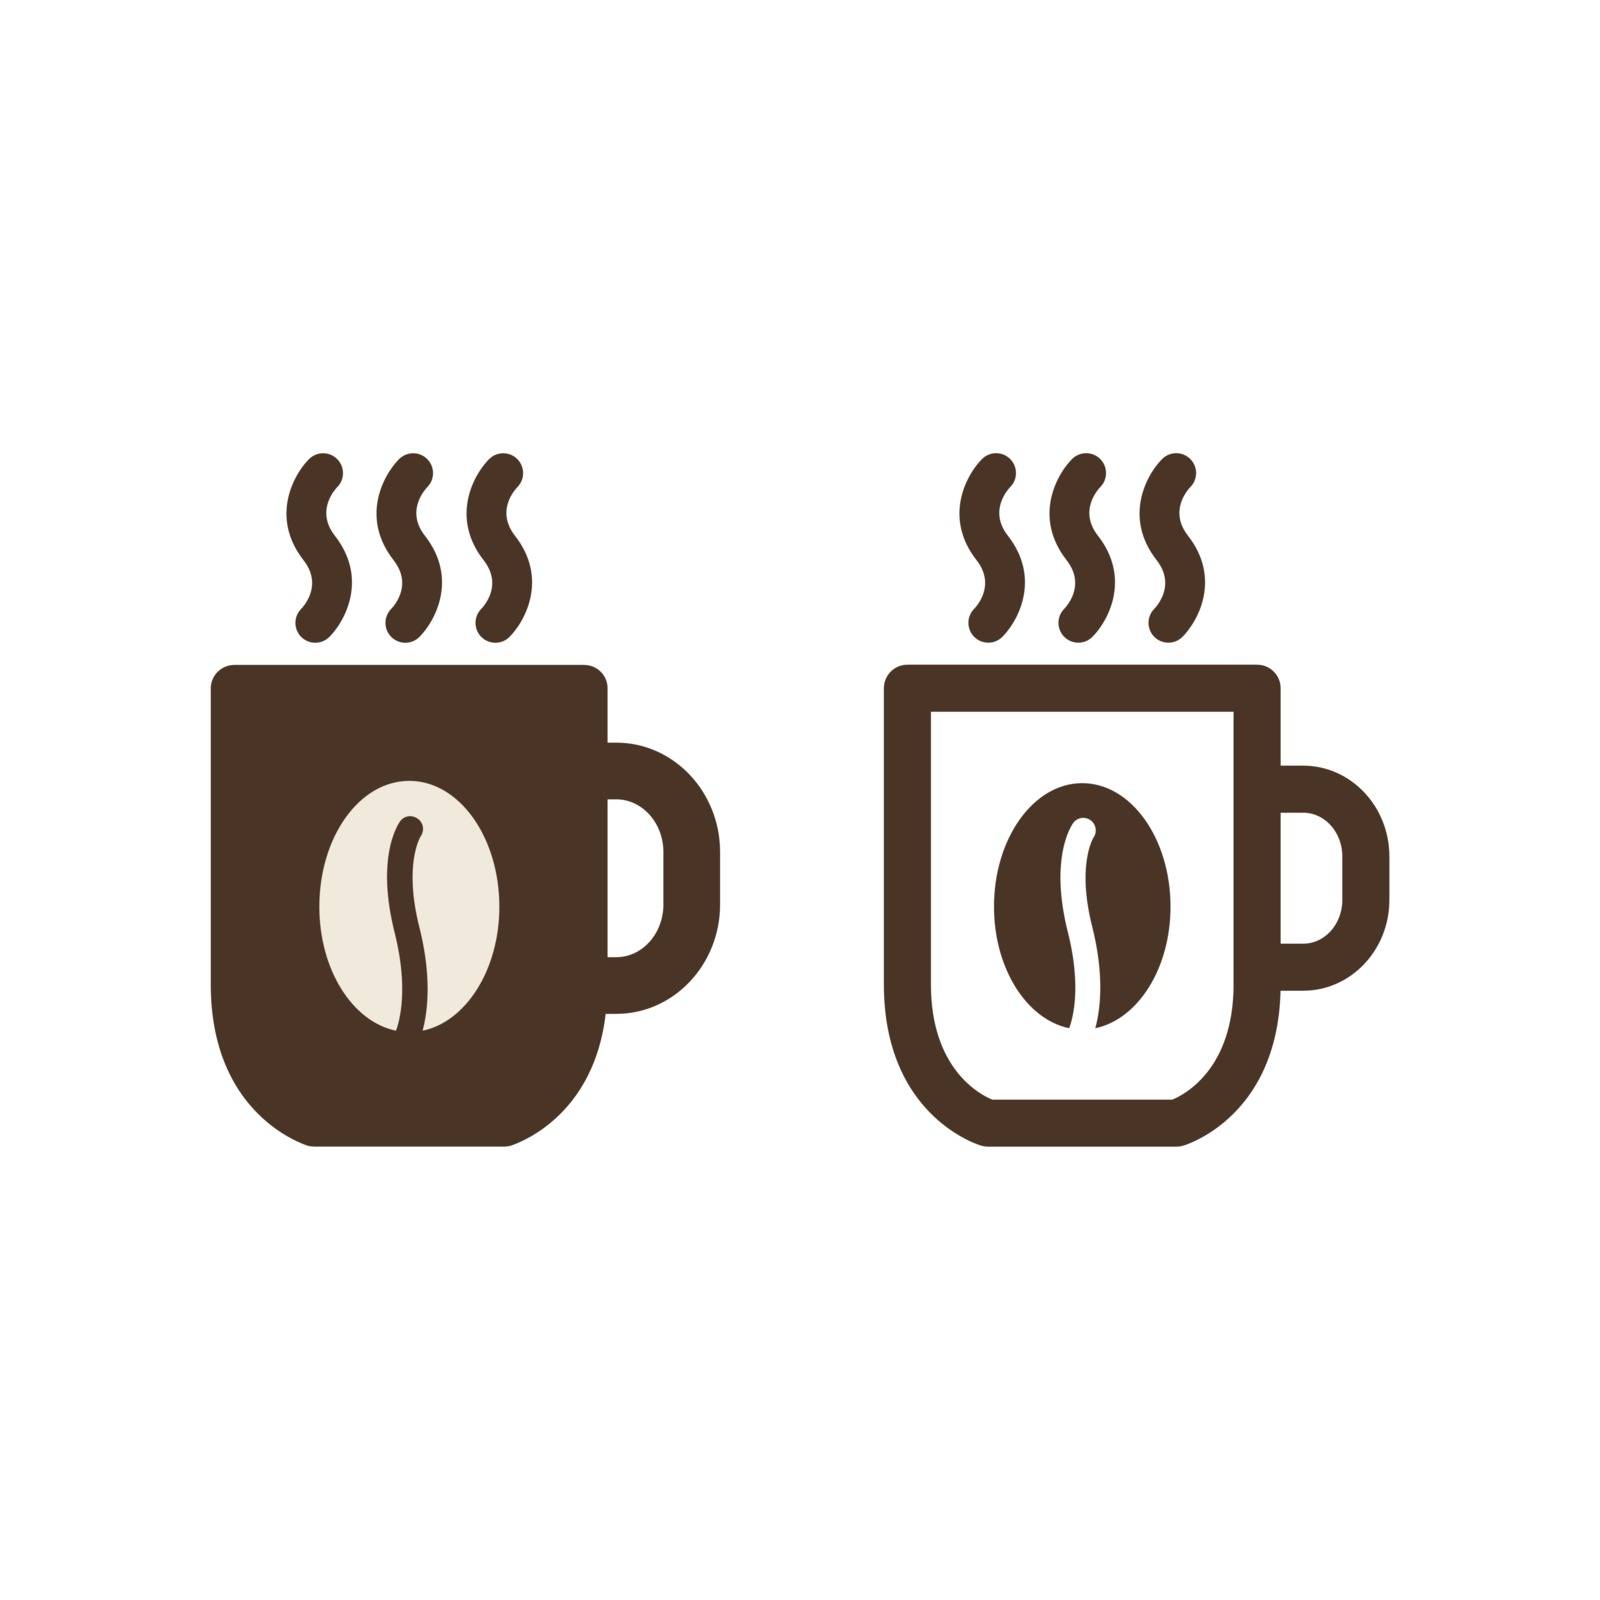 Coffee cup vector icon by cveivn